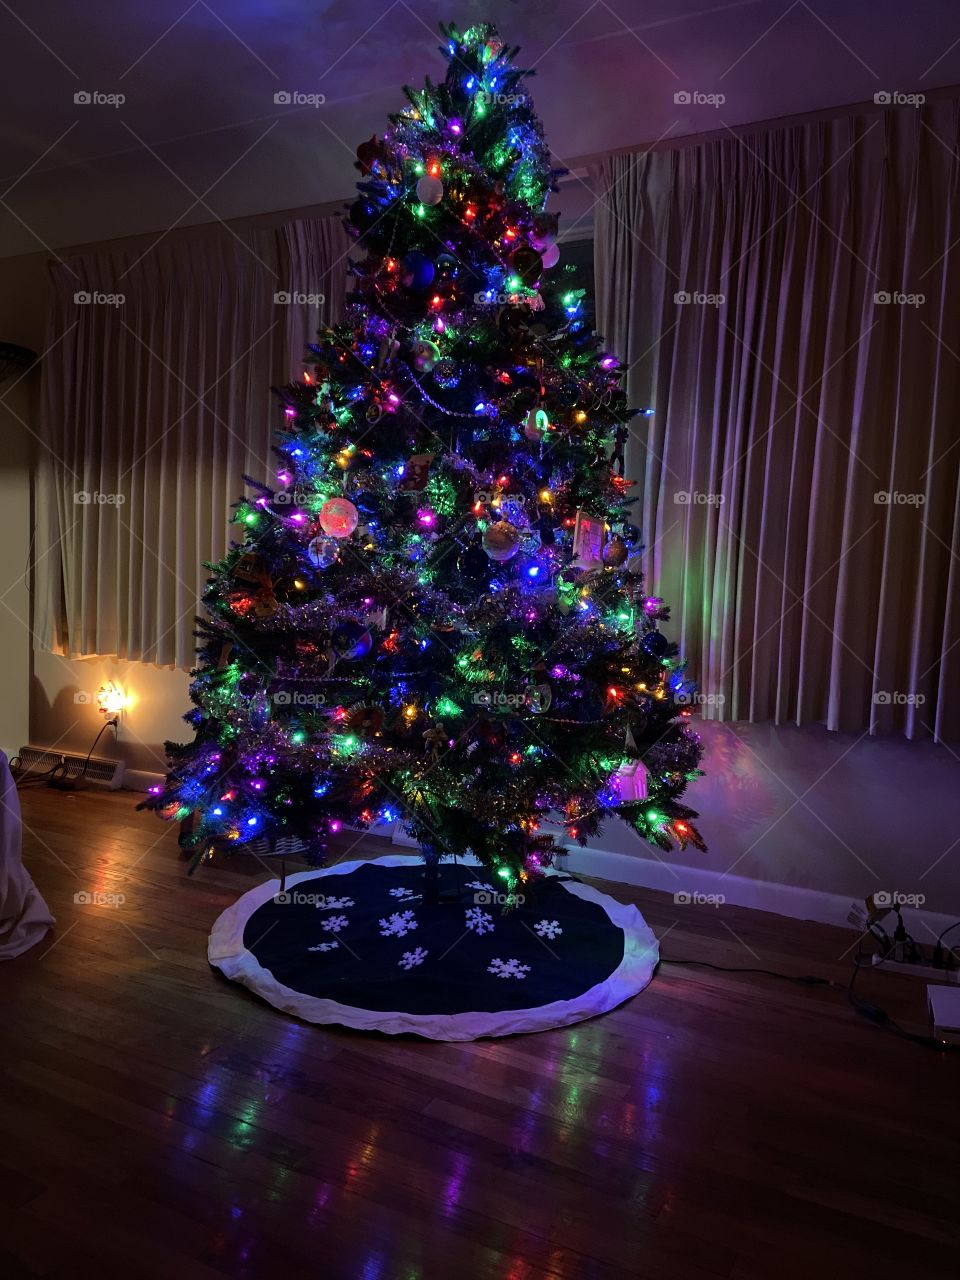 Oh Christmas tree , oh Christmas tree